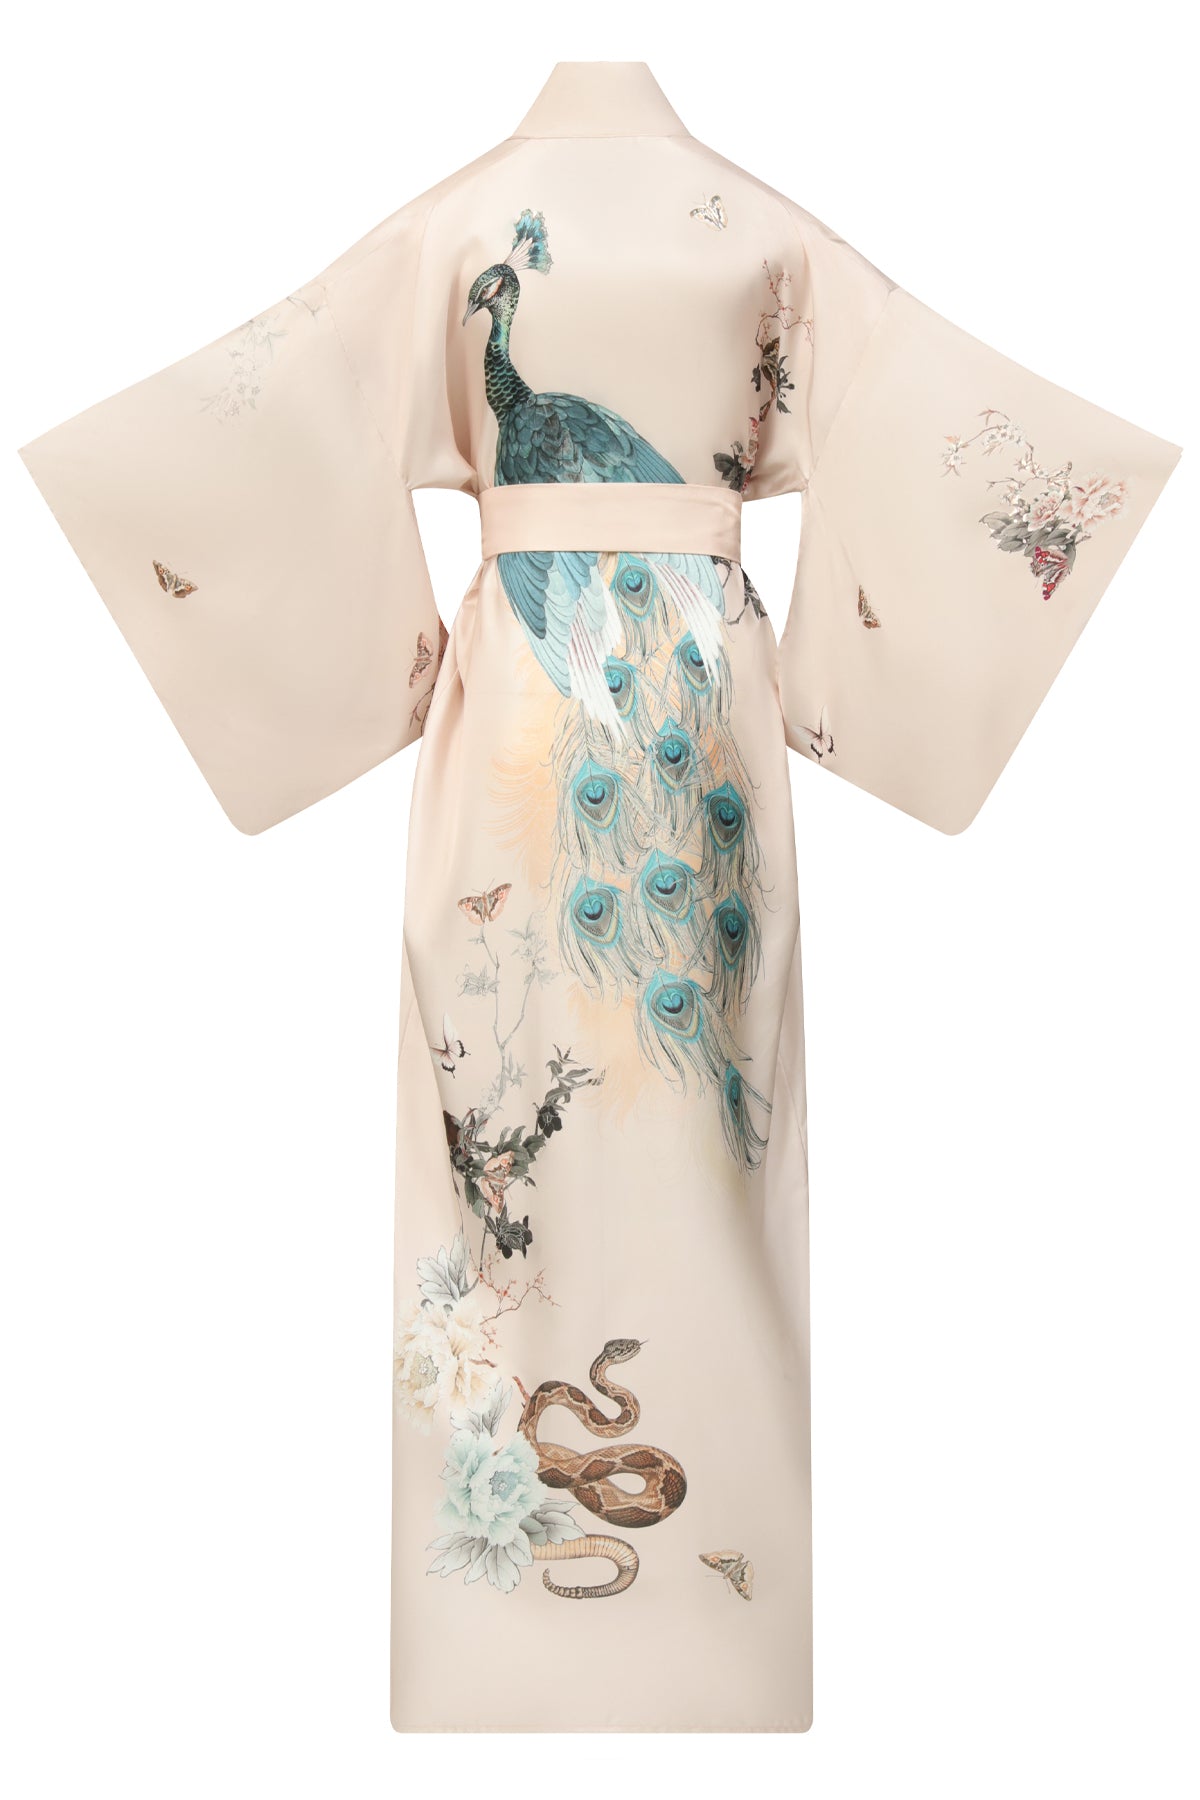 Silk Kimono Dressing Gown Royal Peacock | Pink Kimonos from helenloveday for 345